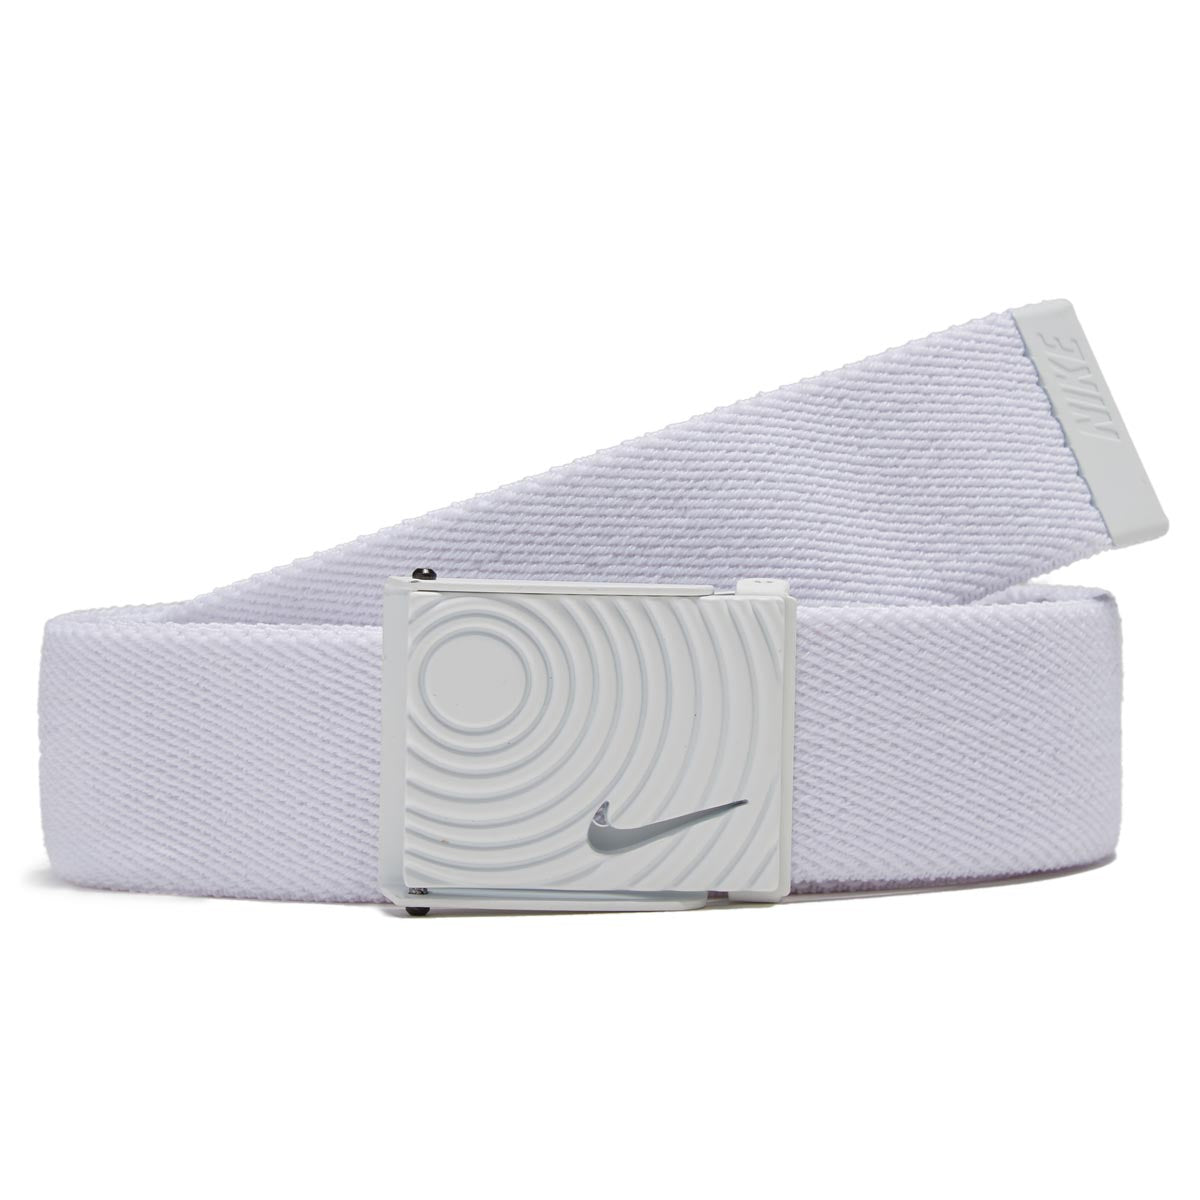 Nike Outsole Stretch Web Belt - White image 1